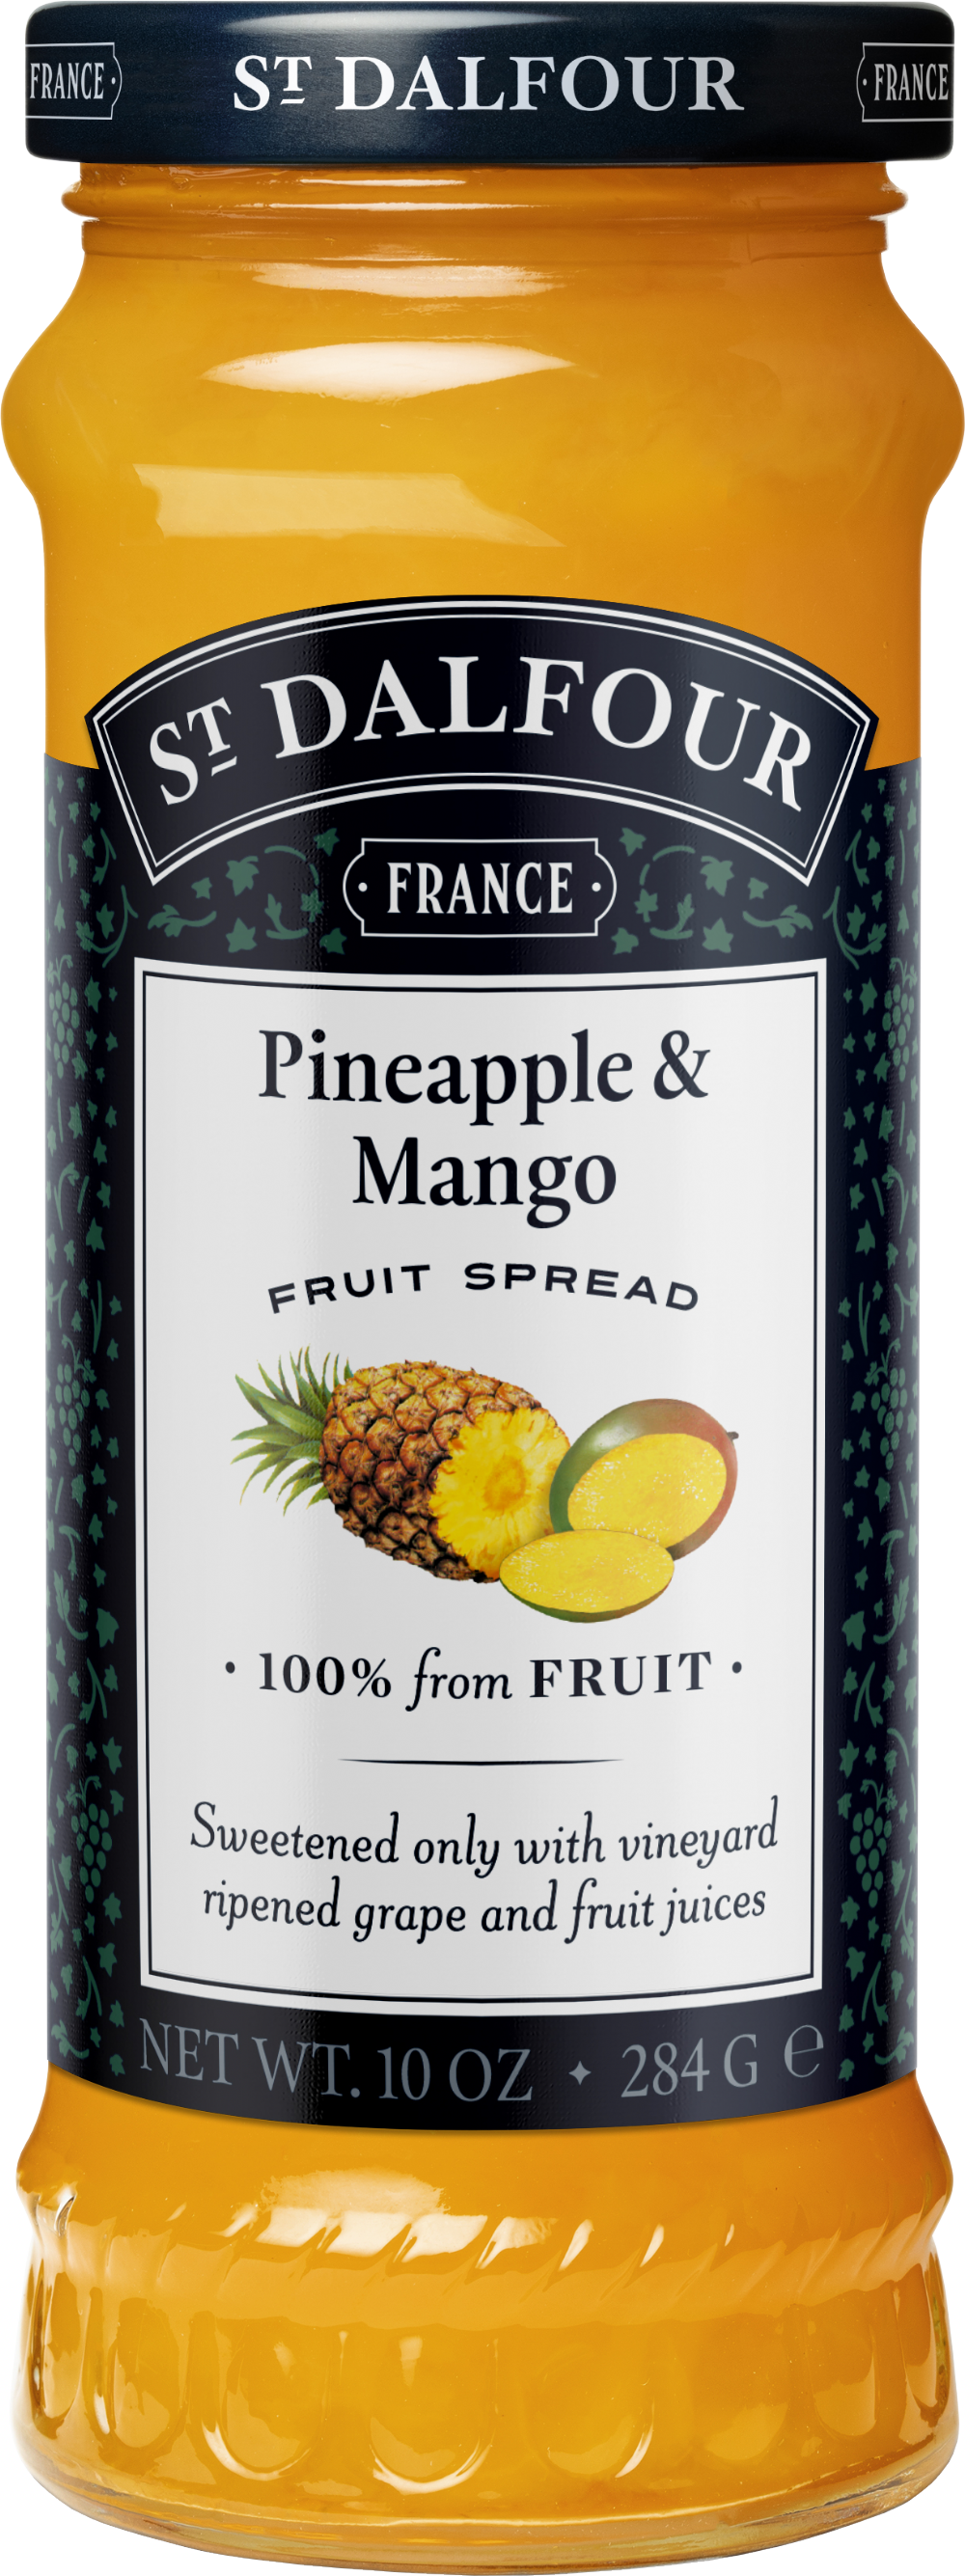 ST DALFOUR Pineapple & Mango Fruit Spread 284g